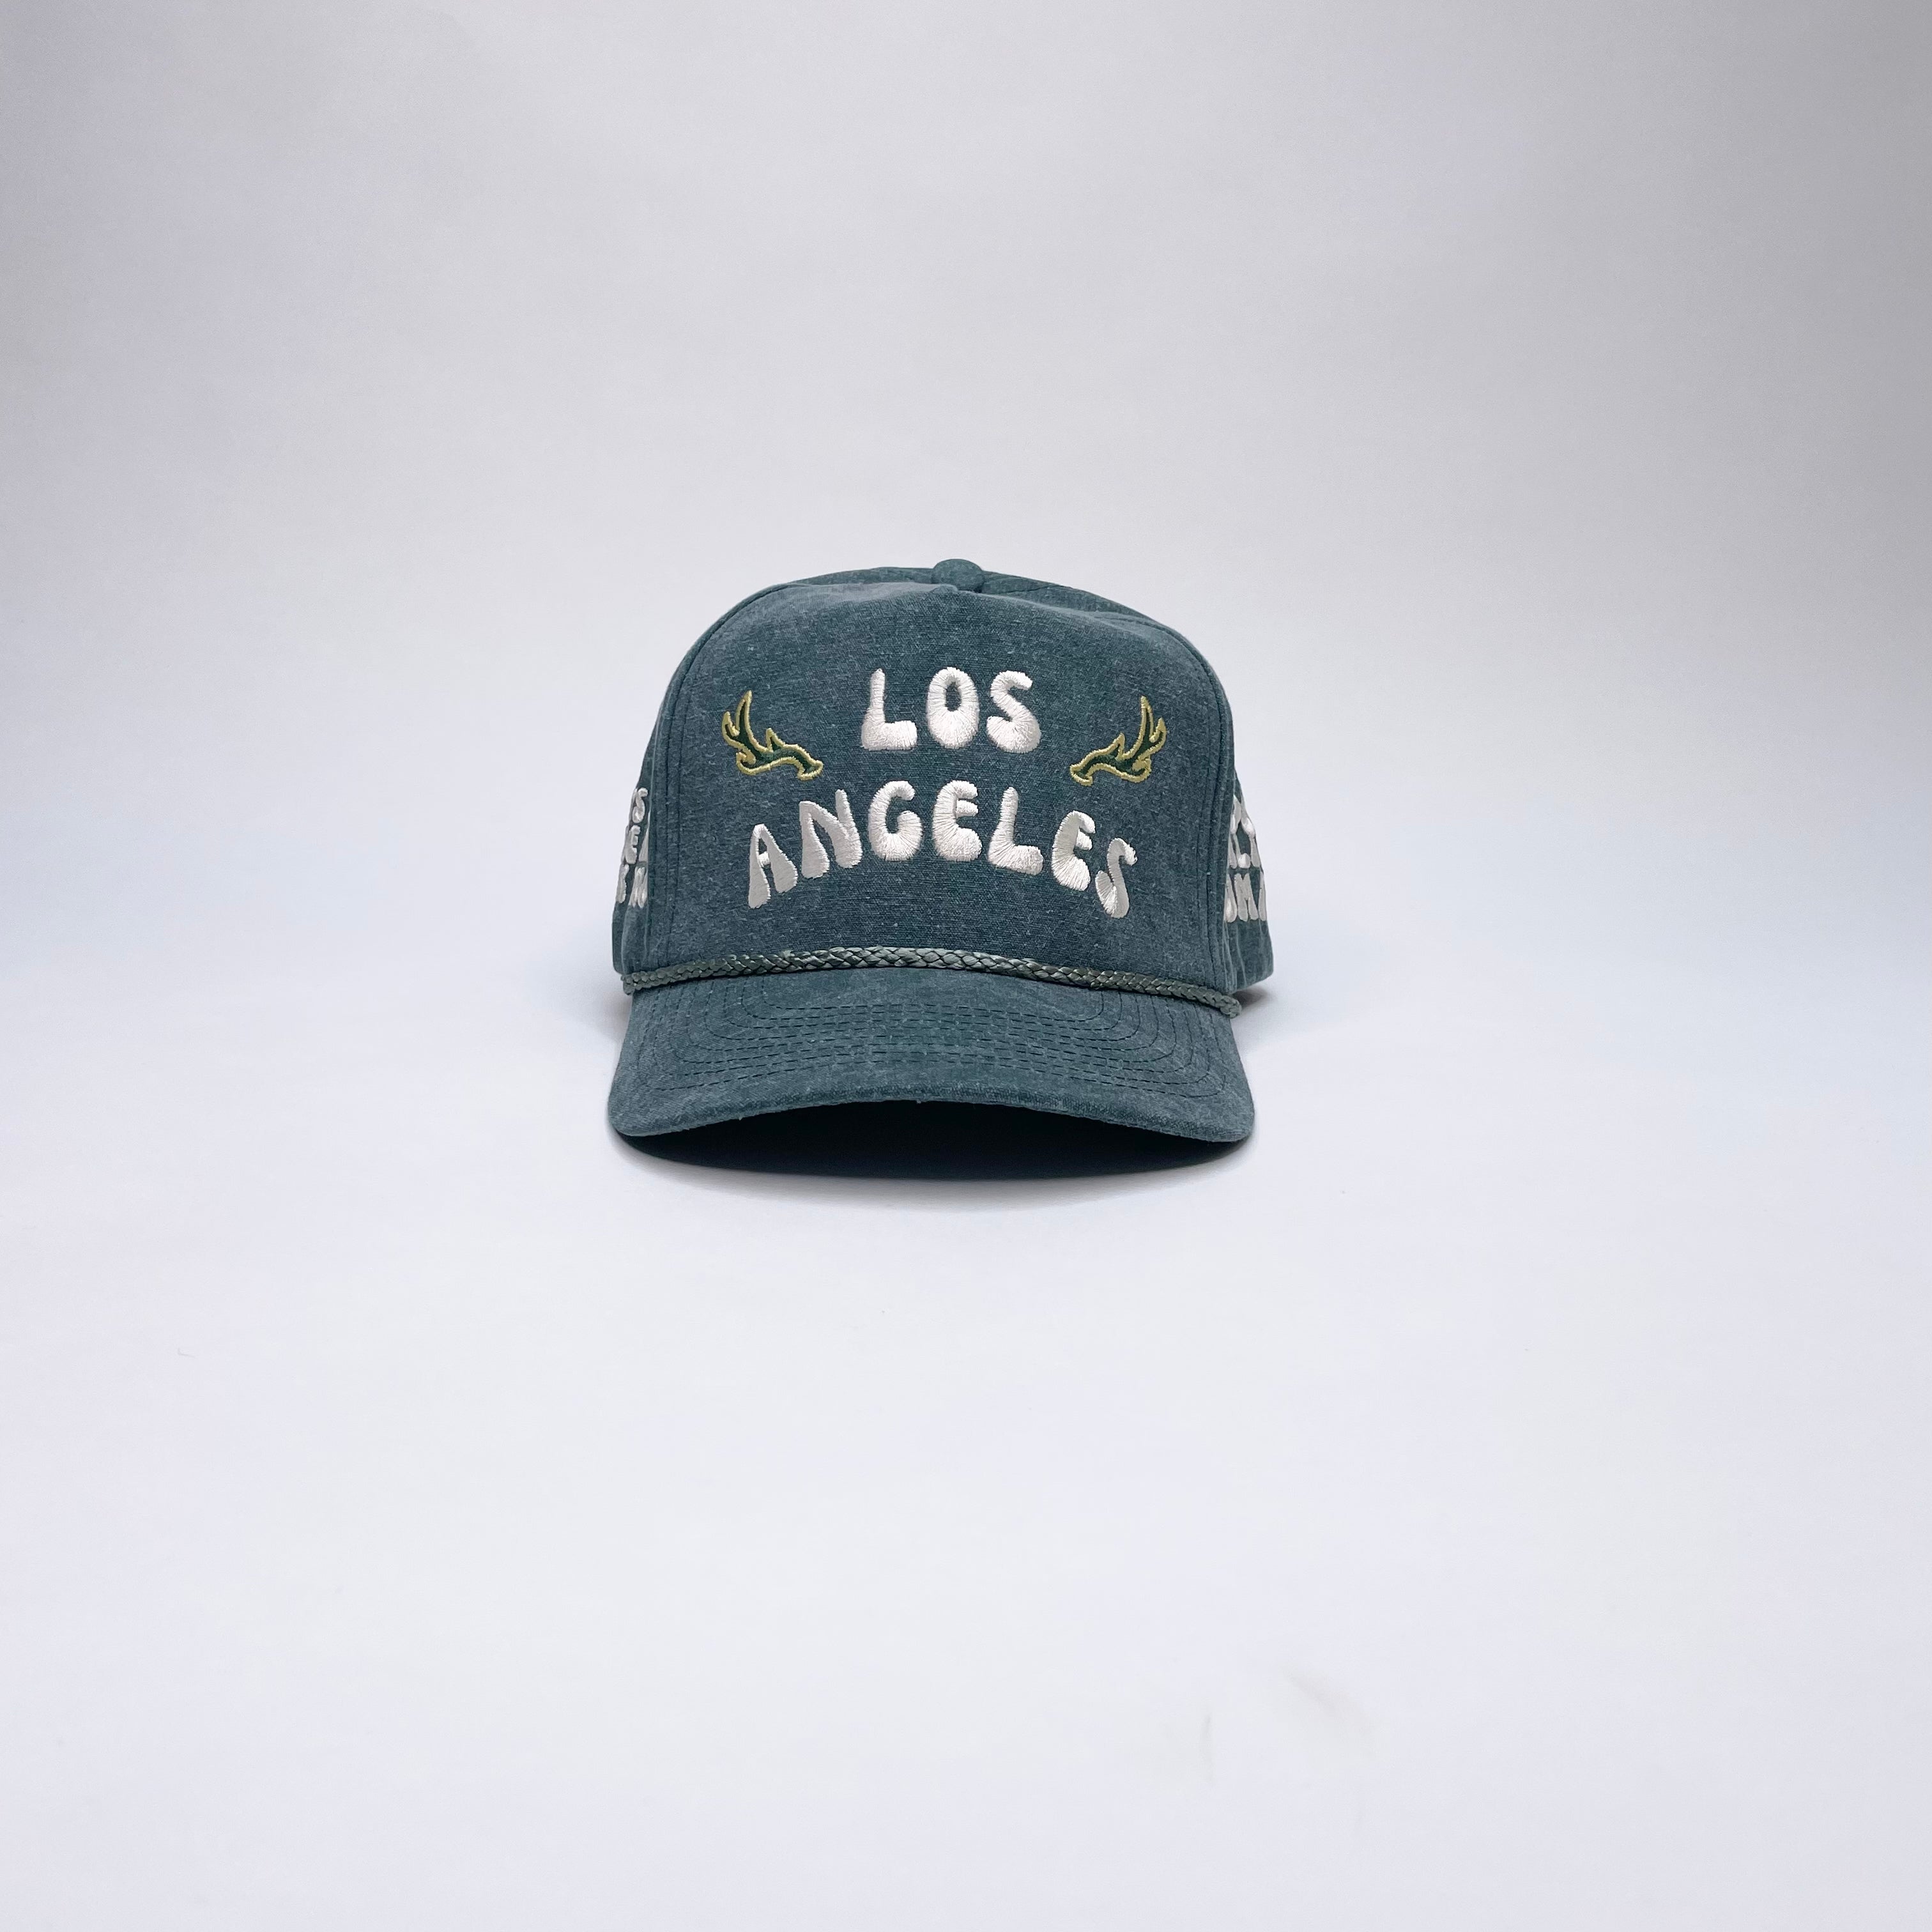 LOS ANGELES ANTLERS – Good Quality Human